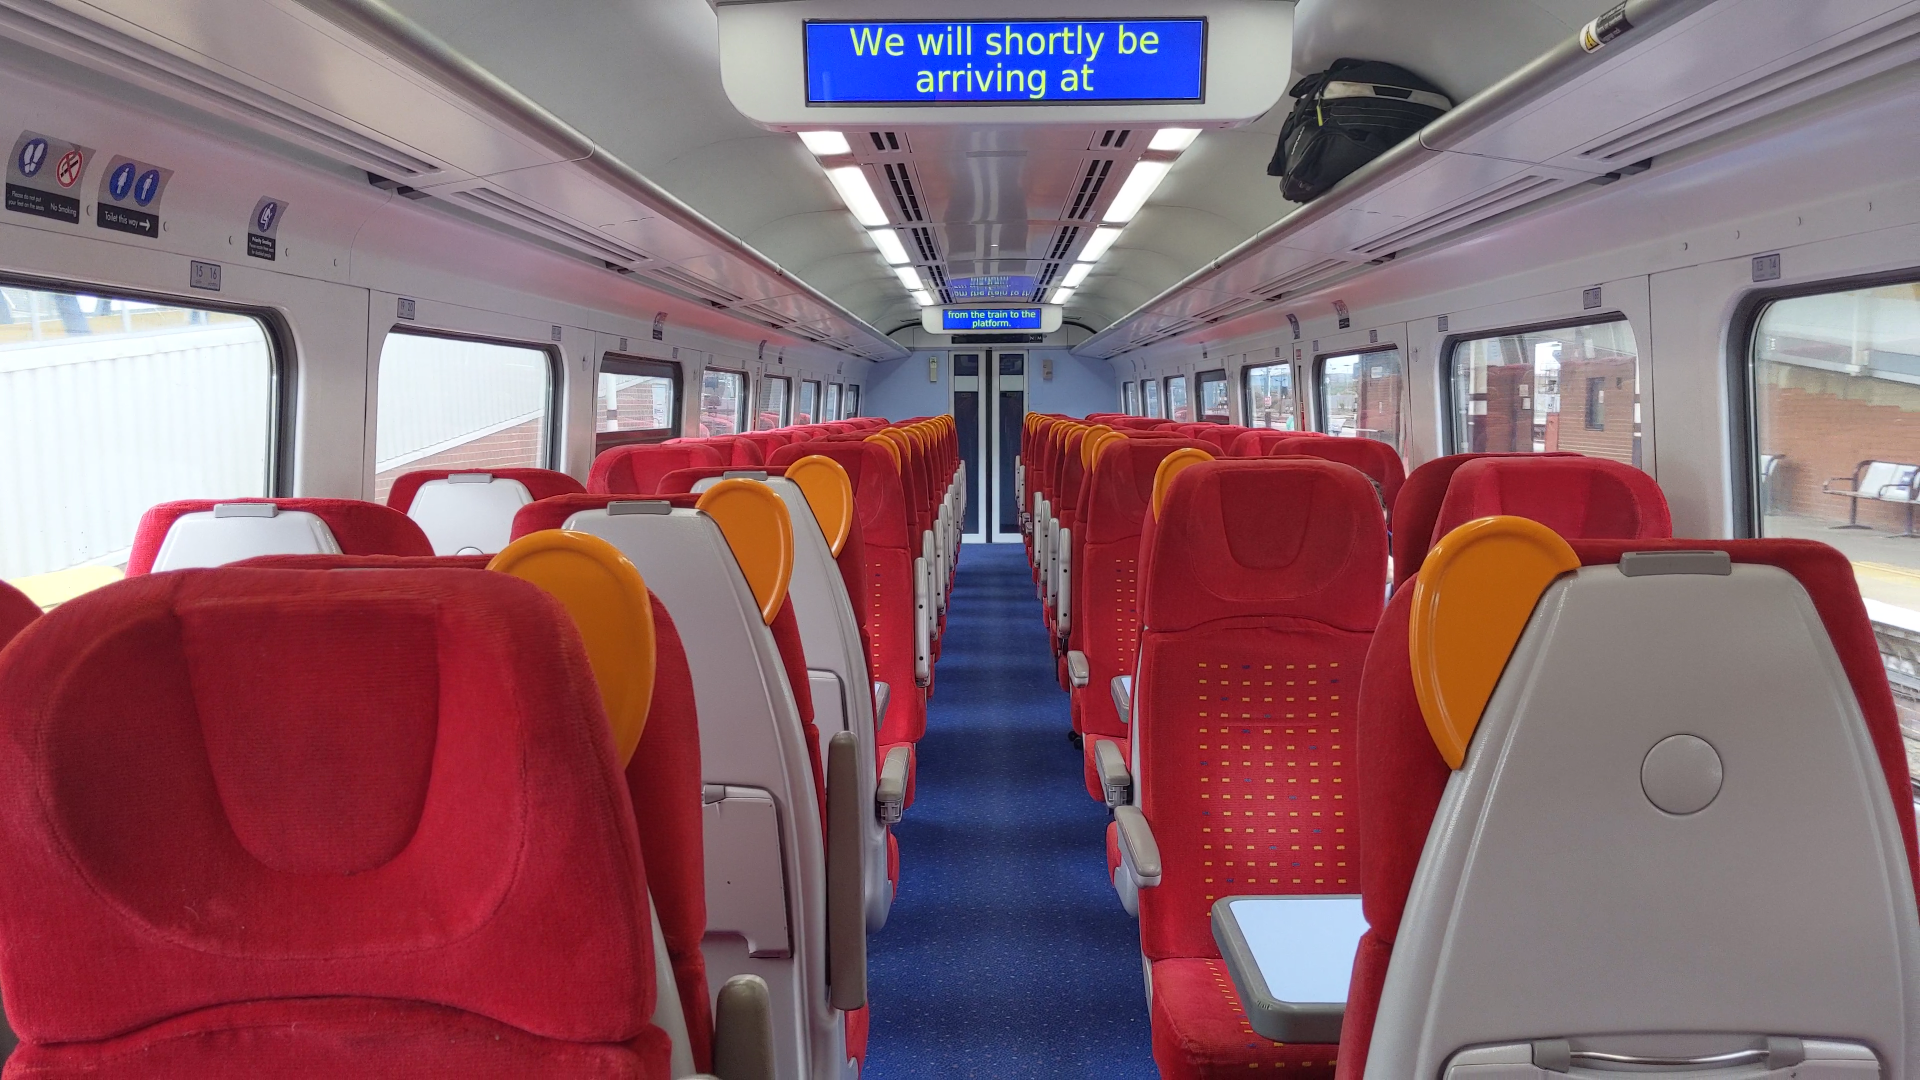 A Look at the EMR Class 158 Express Sprinter